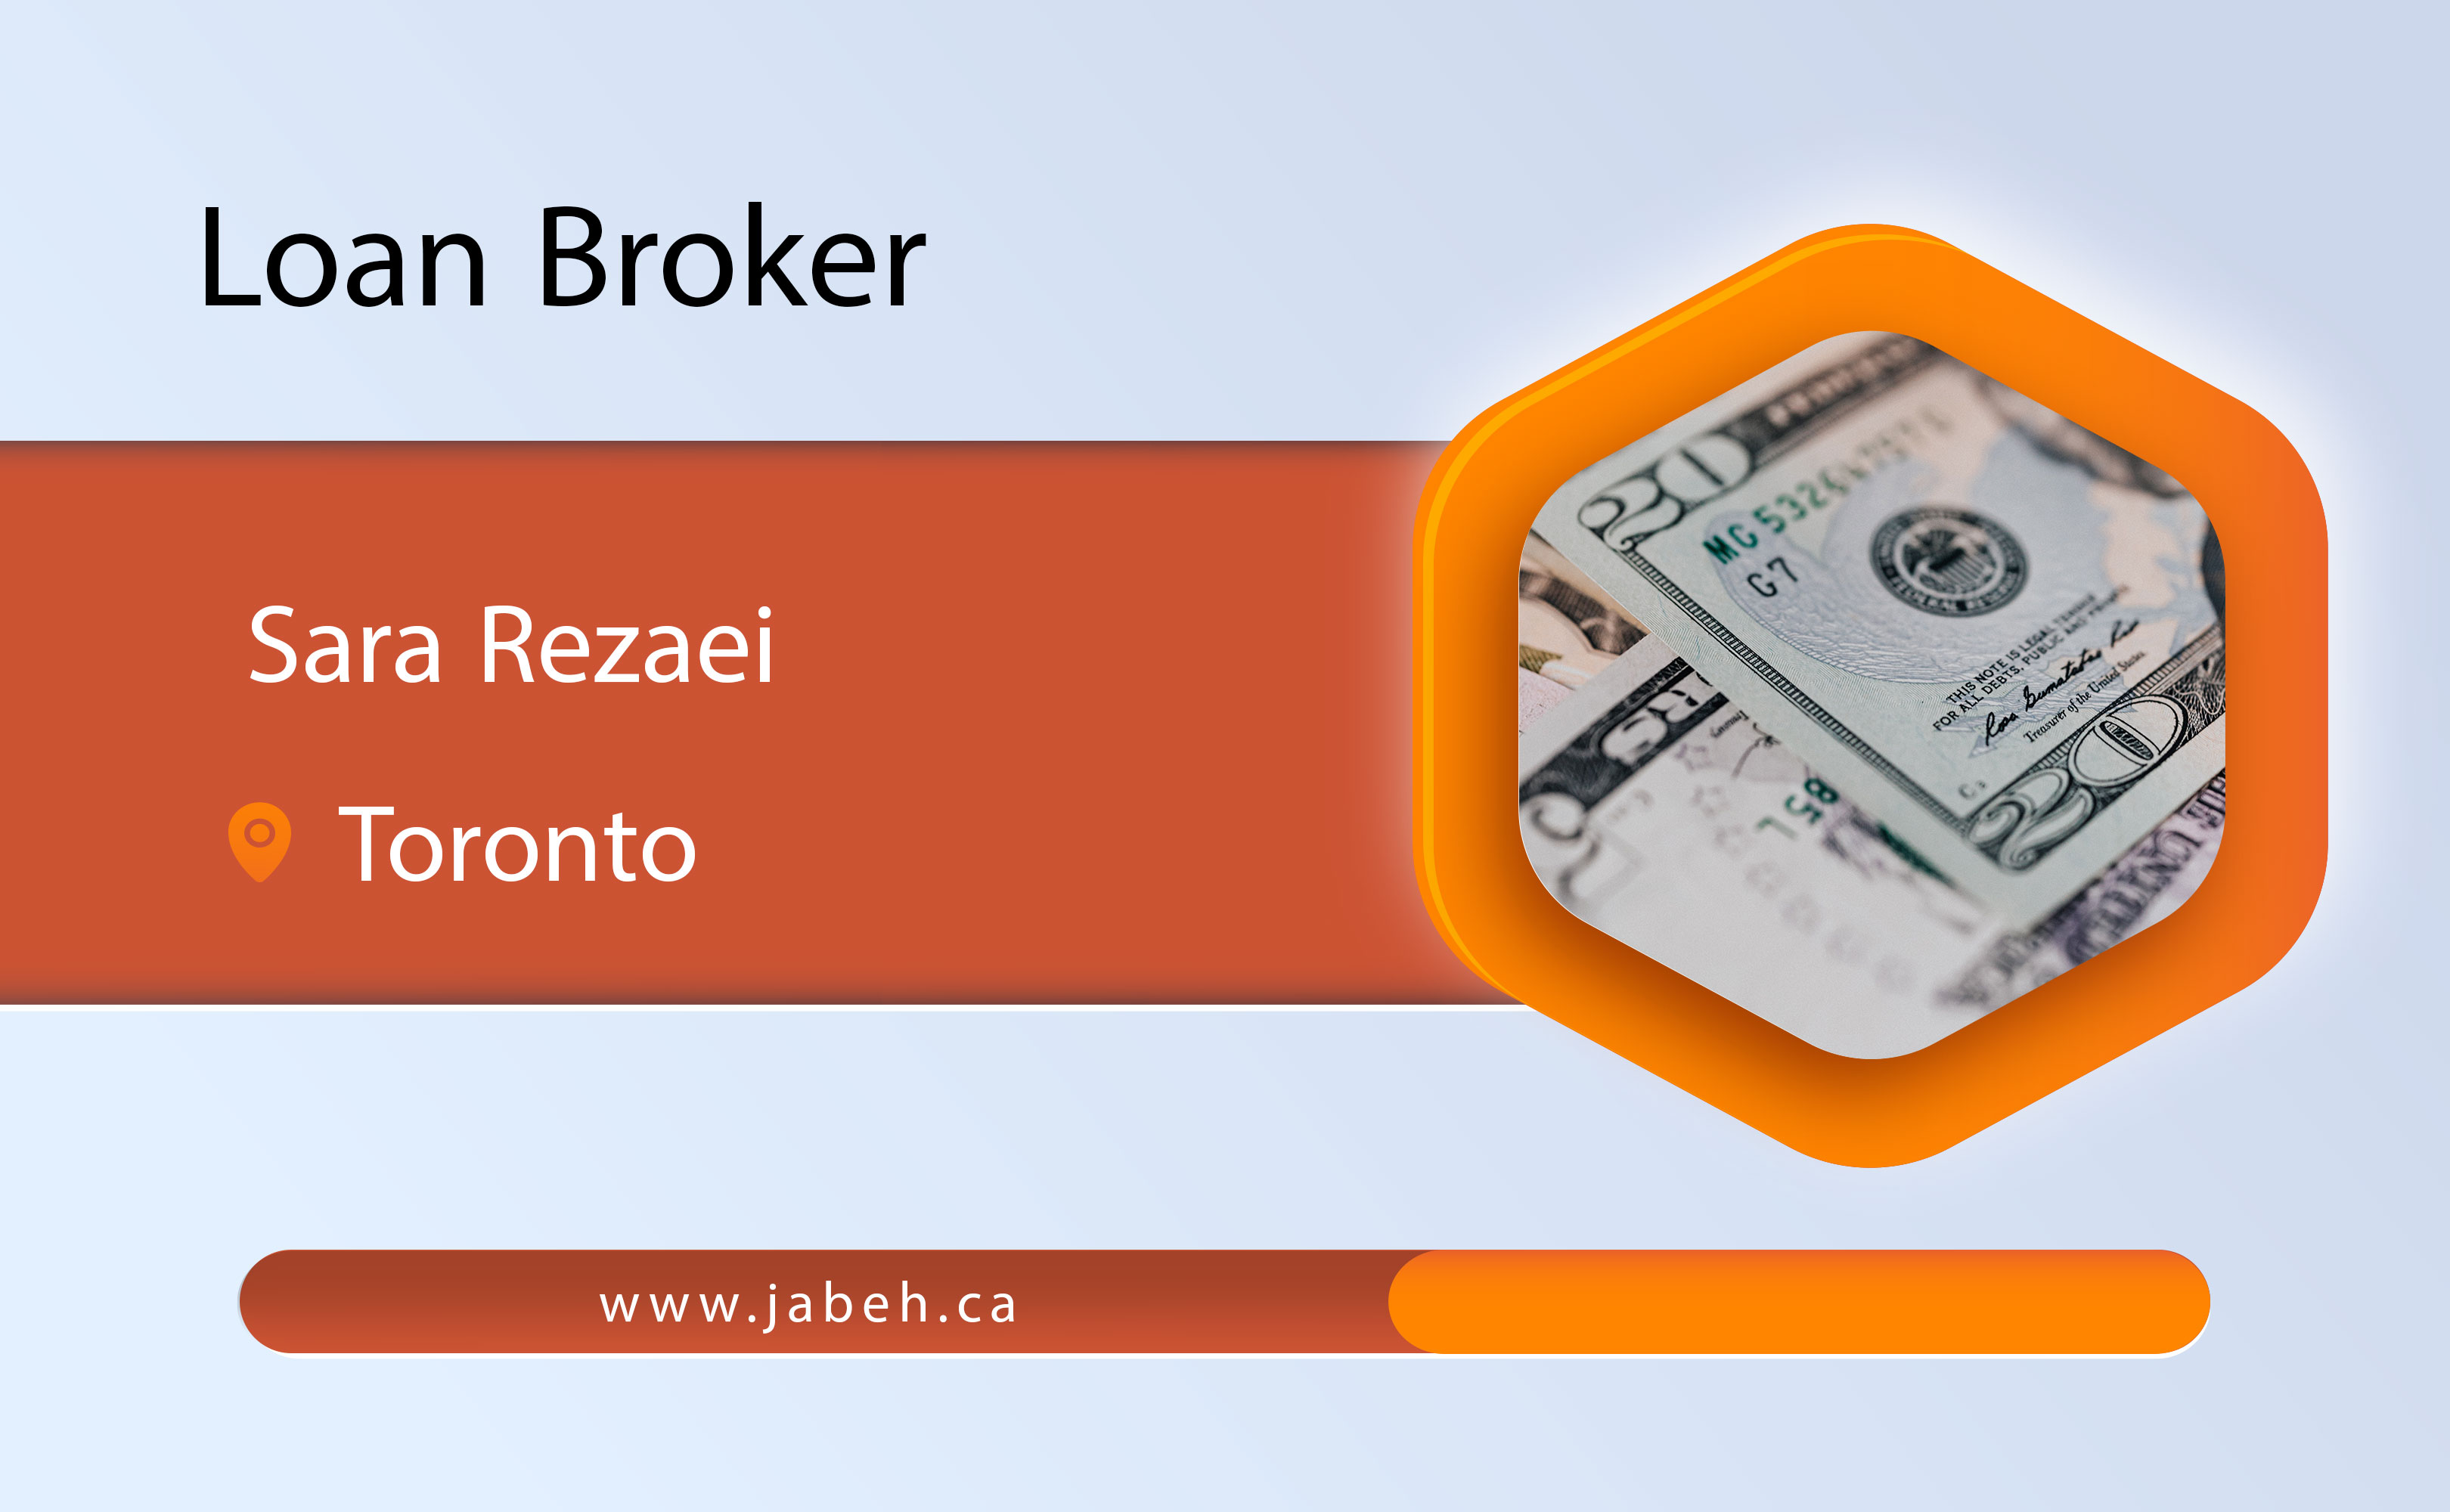 Iranian loan broker Sara Rezaei in Toronto